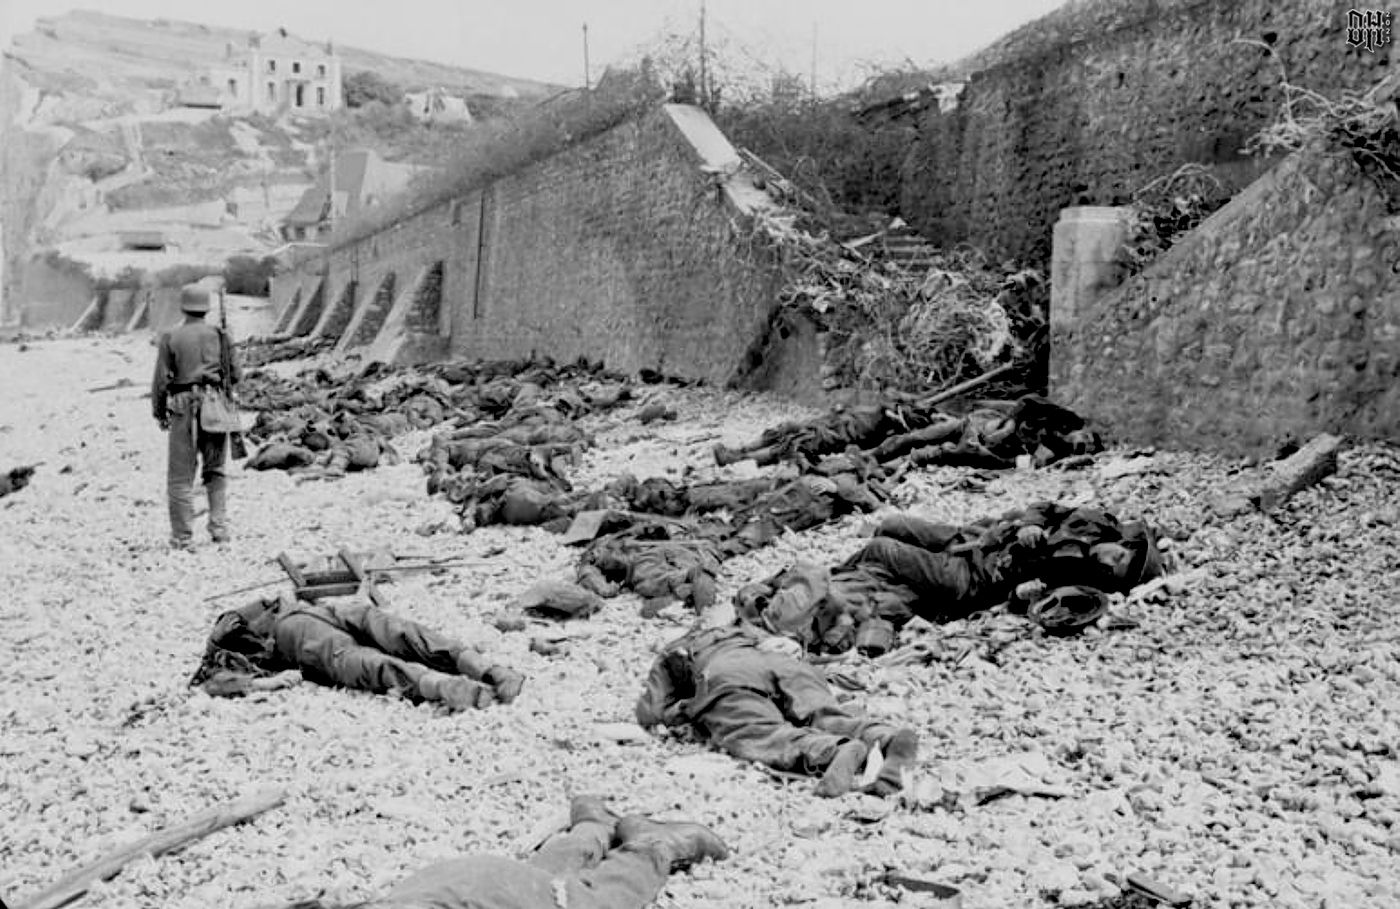 DH - WW2 Dead Canadian Soldiers 4 - Dead Canadians on Dieppe beach - 1942.jpg